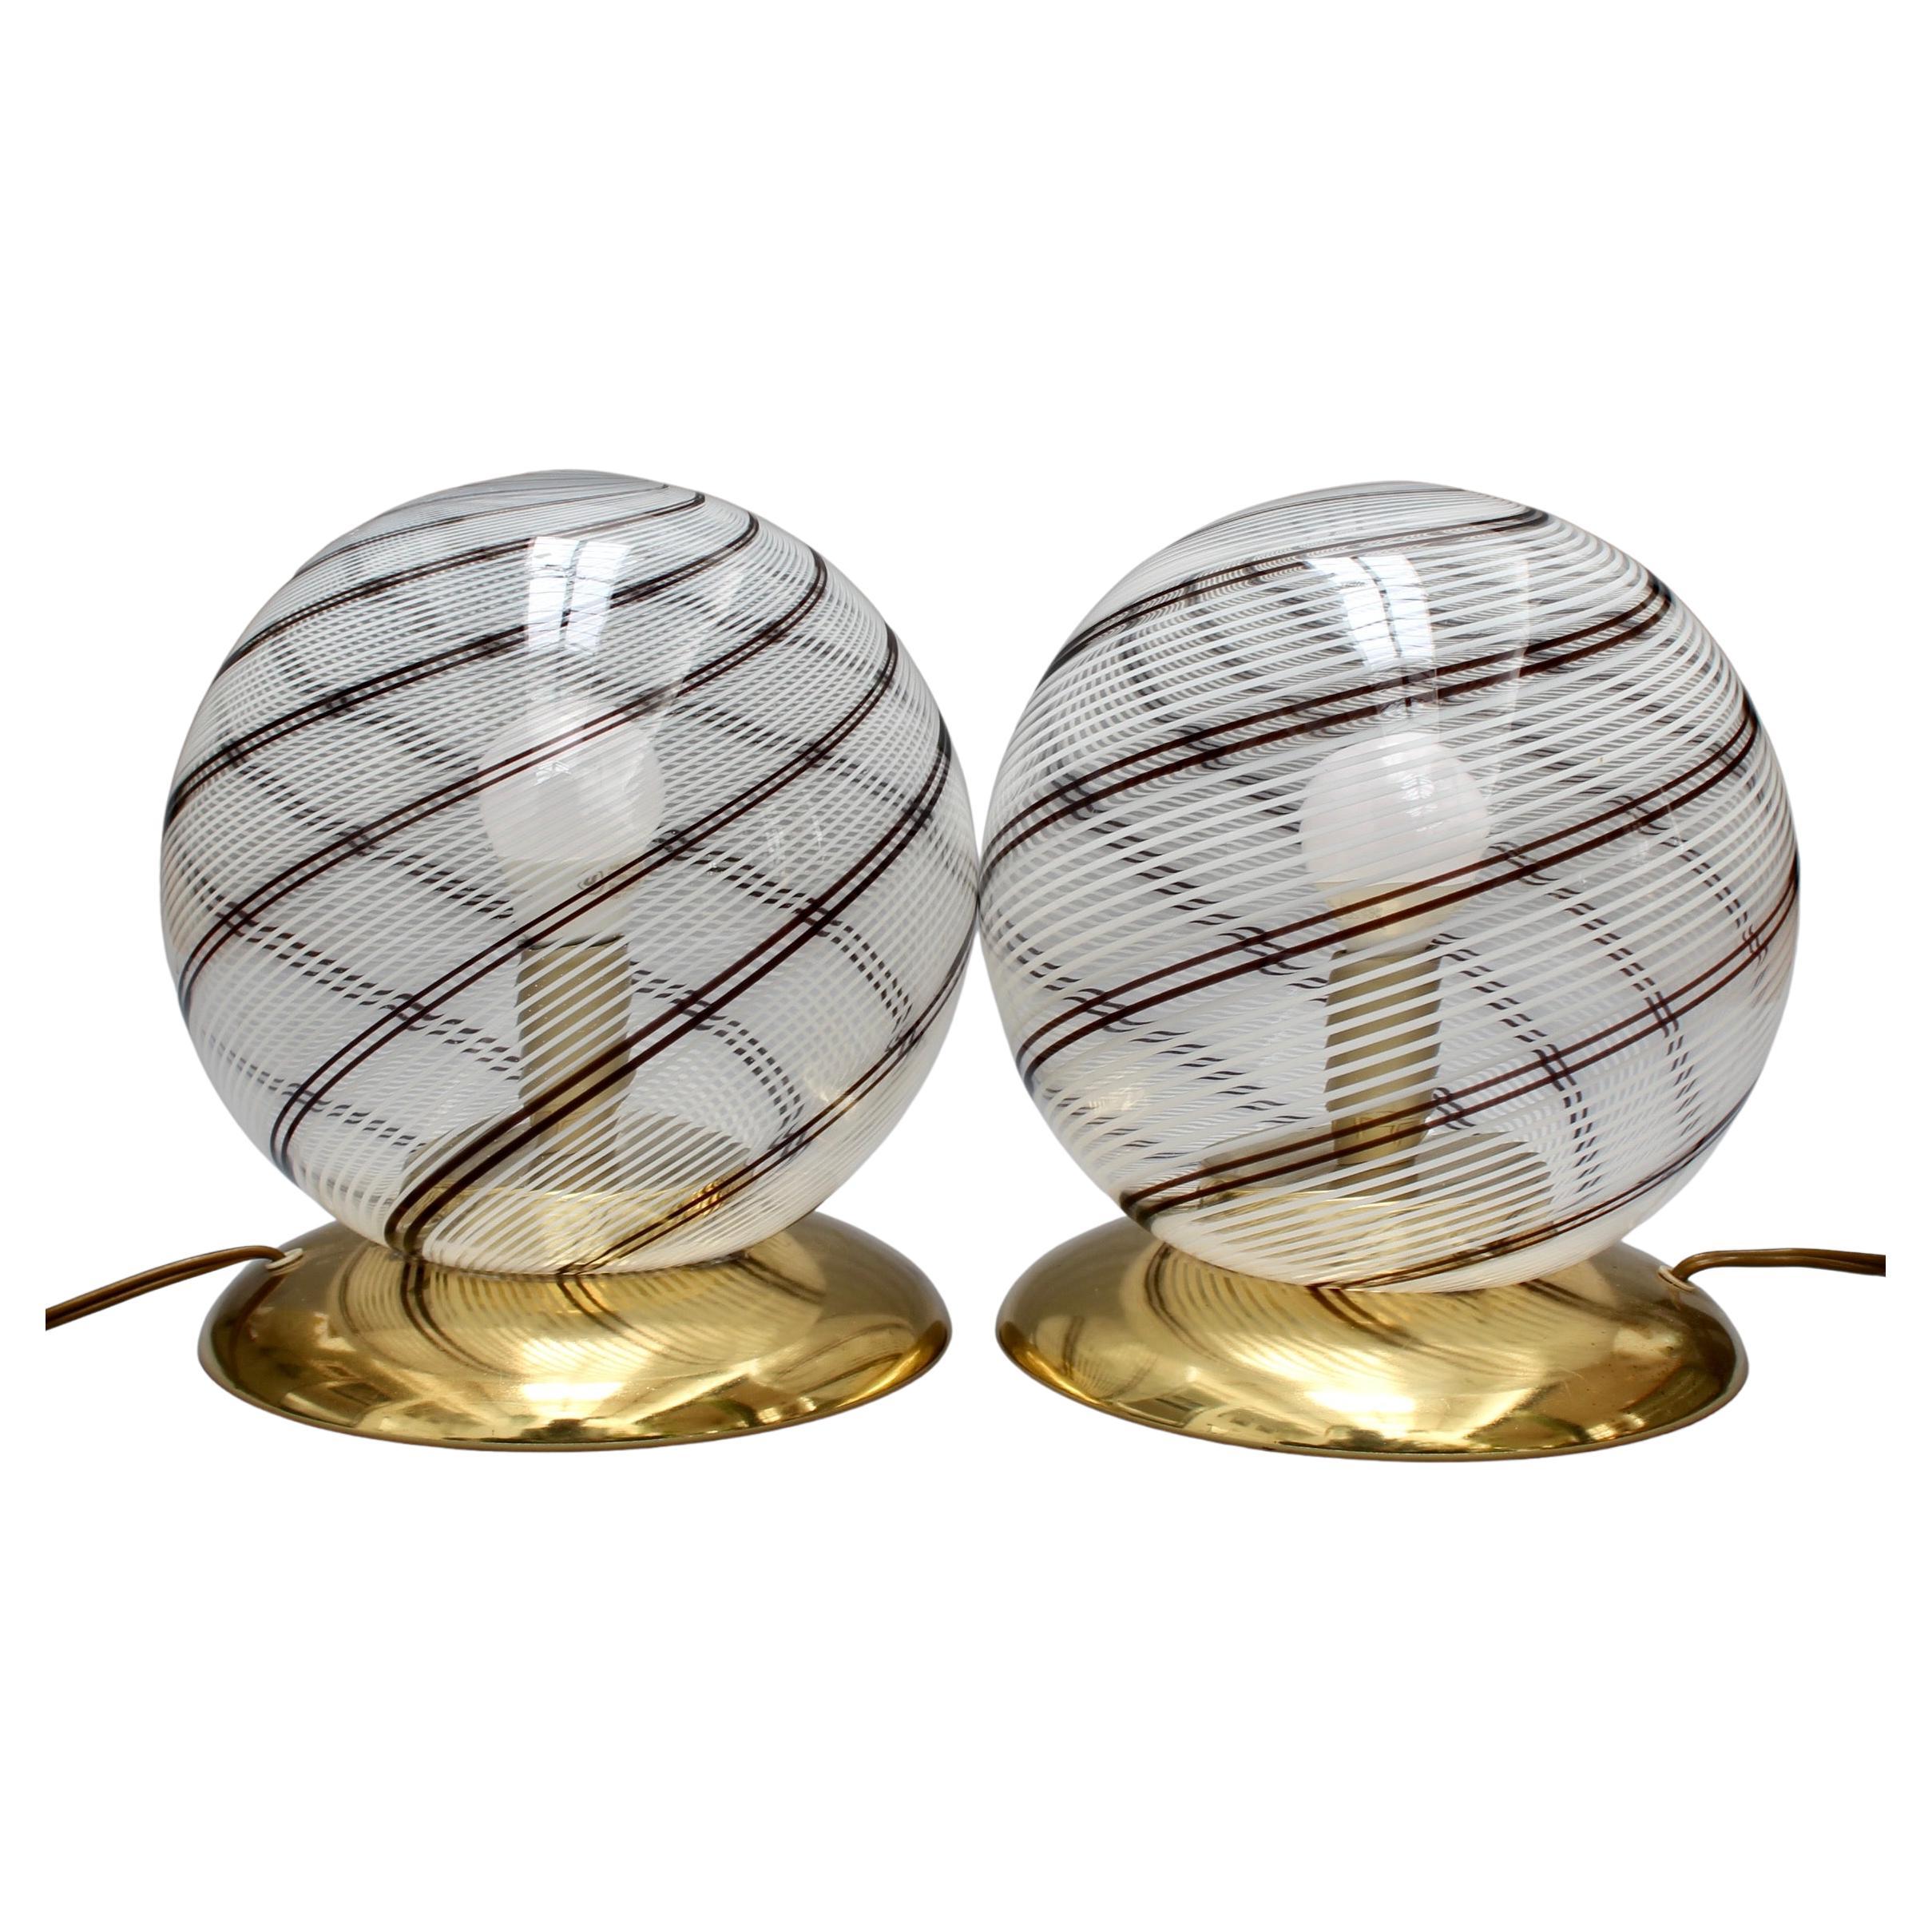 Pair of Murano Glass Globe Table Lamps 'circa 1970s'